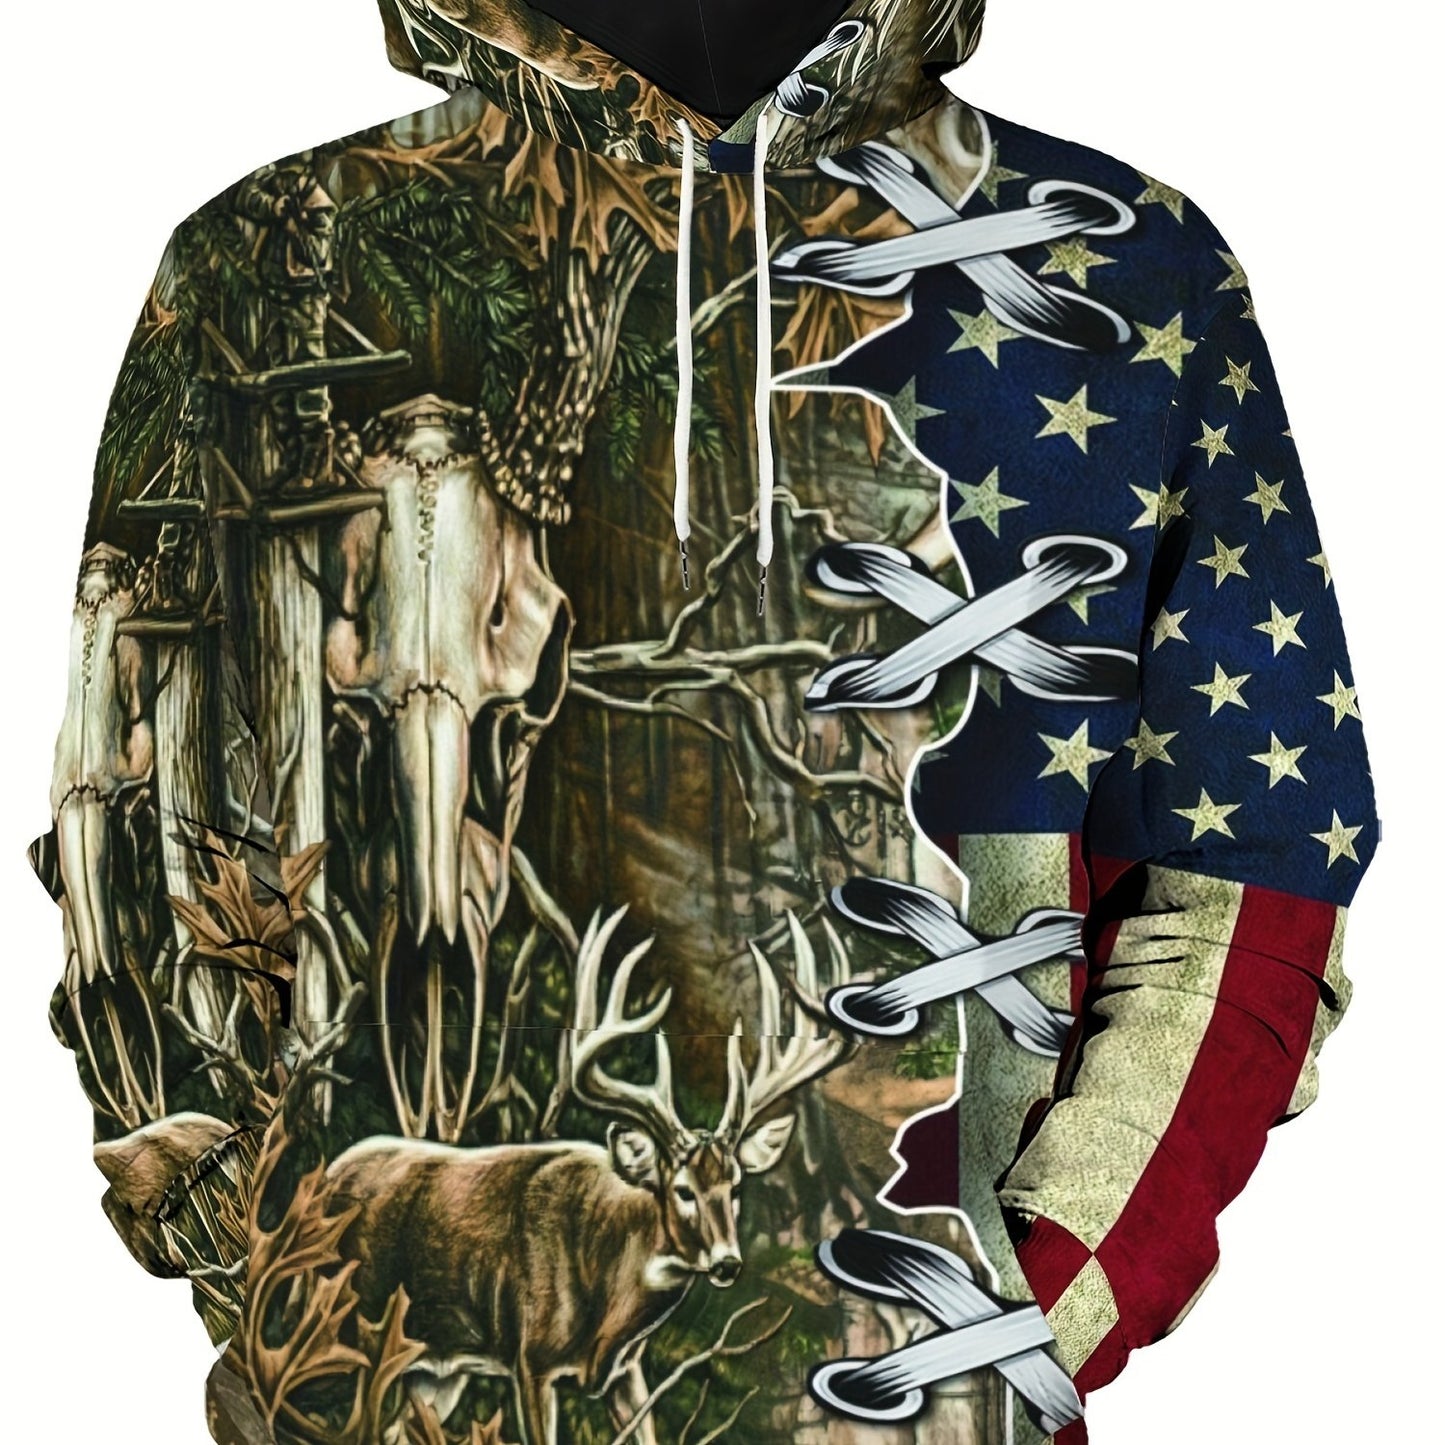 Retro Deer & Flag Print Hoodie, Cool Hoodies For Men, Men's Casual Graphic Design Pullover Hooded Sweatshirt With Kangaroo Pocket Streetwear For Winter Fall, As Gifts